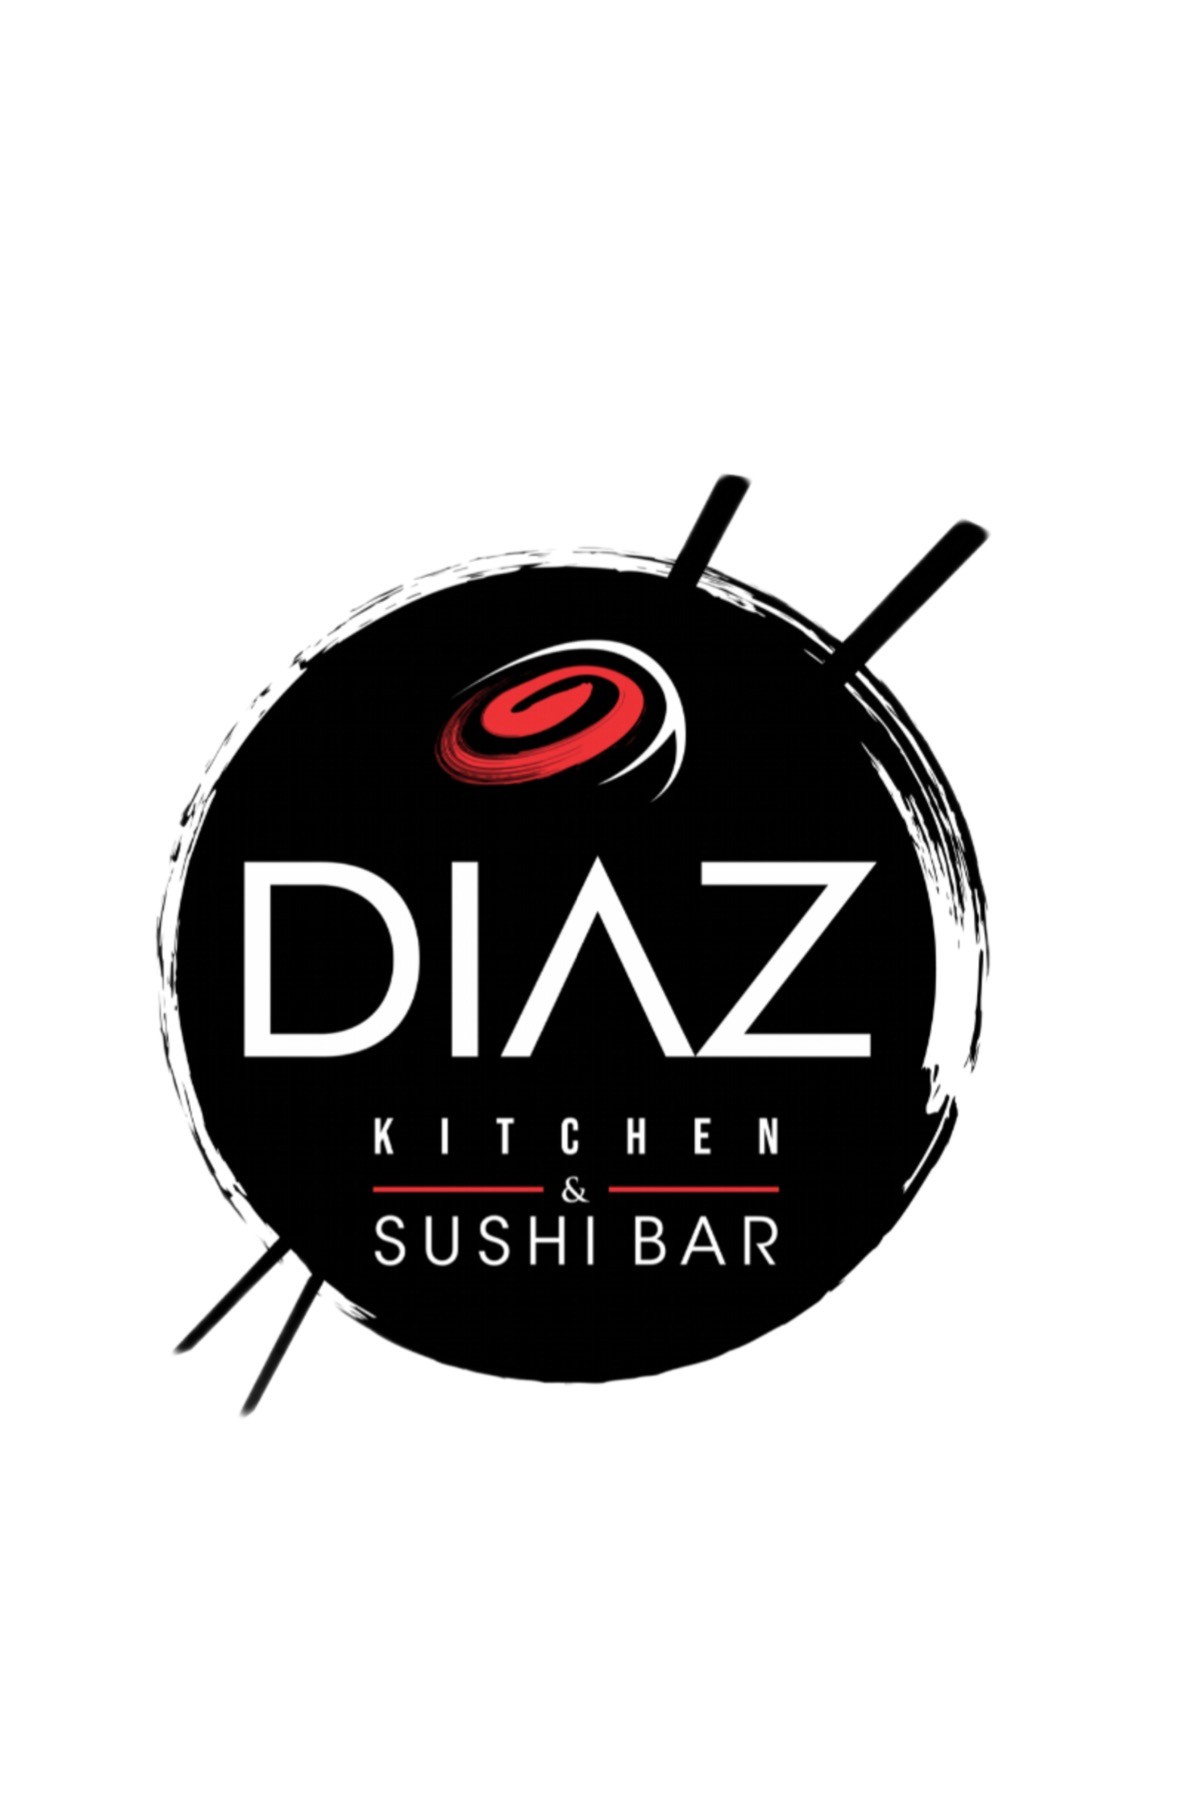 Diaz Kitchen and Sushi Bar